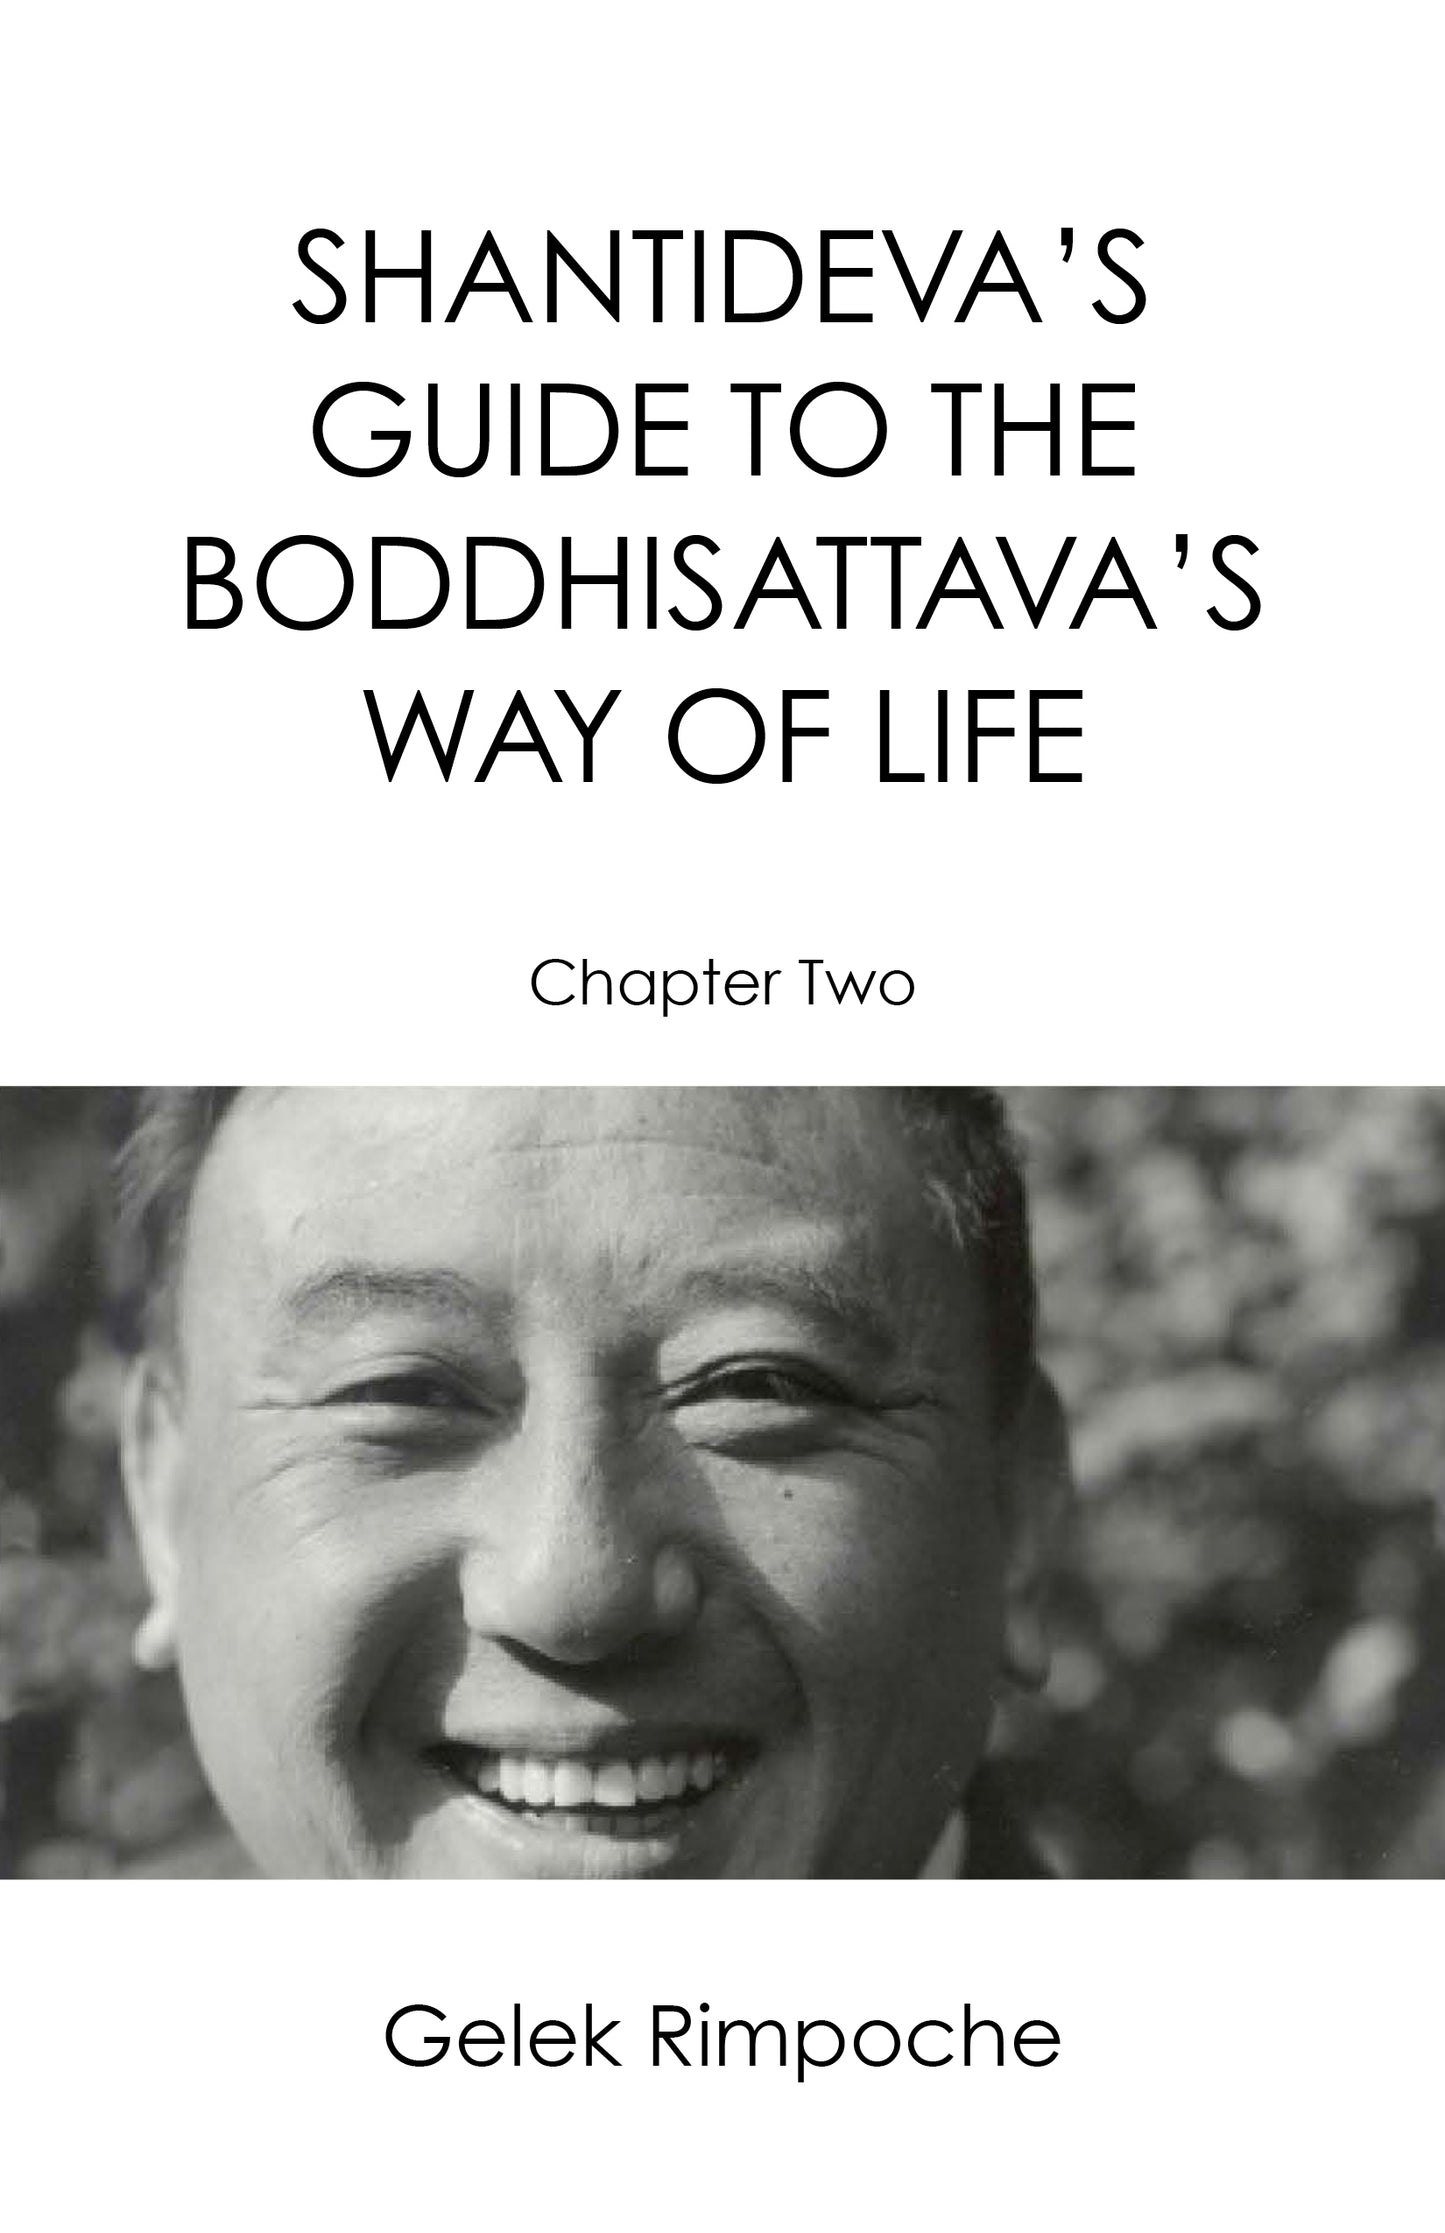 Shantideva's Guide to The Boddhisattava's Way of Life Chapter 2